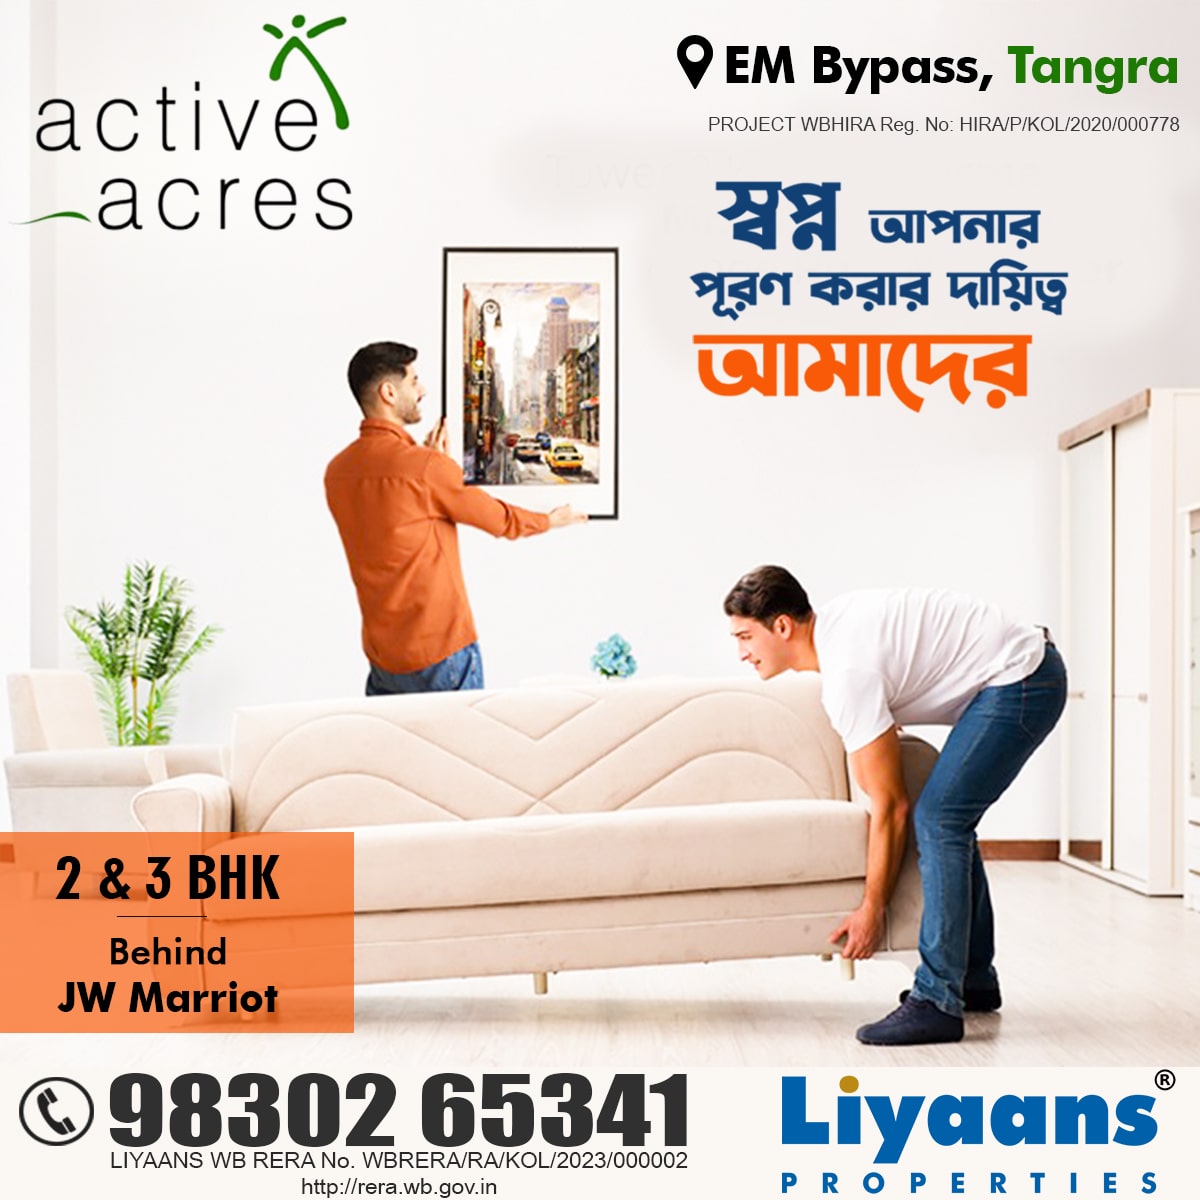 2/3 BHK premium apartments in Tangra, Kolkata. Hurry up! Call now 9830265341 or visit : bit.ly/3Qh4n9S

#ActiveAcres #KolkataApartments #LuxuryLiving #PremiumApartments #ModernAmenities #FlatsinKolkata #FlatsinTangra #LiyaansProperties #MaheshSomani